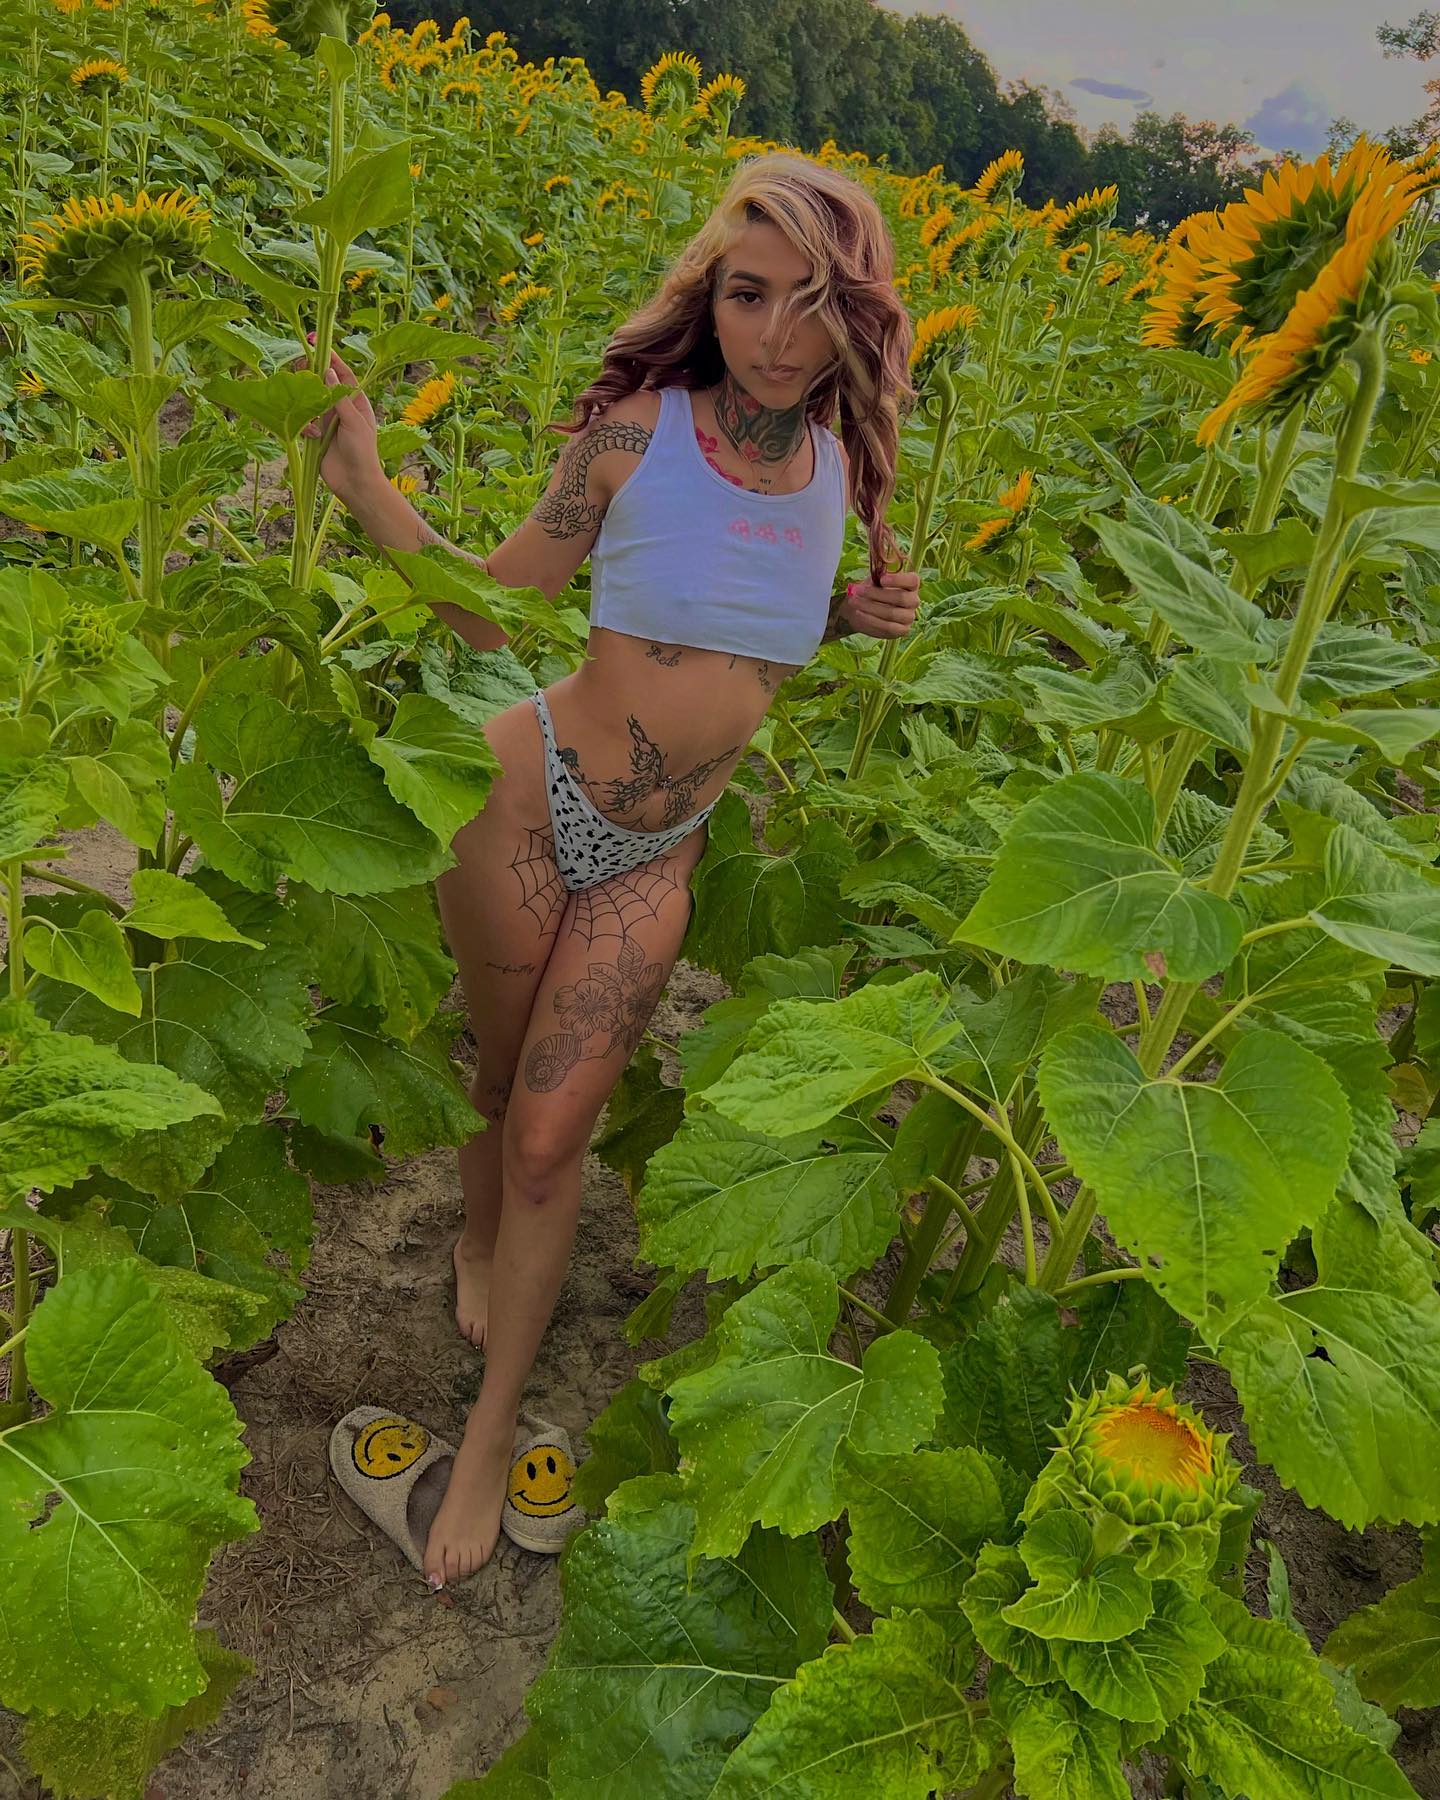 you’re a sunflower 🌻
#explore